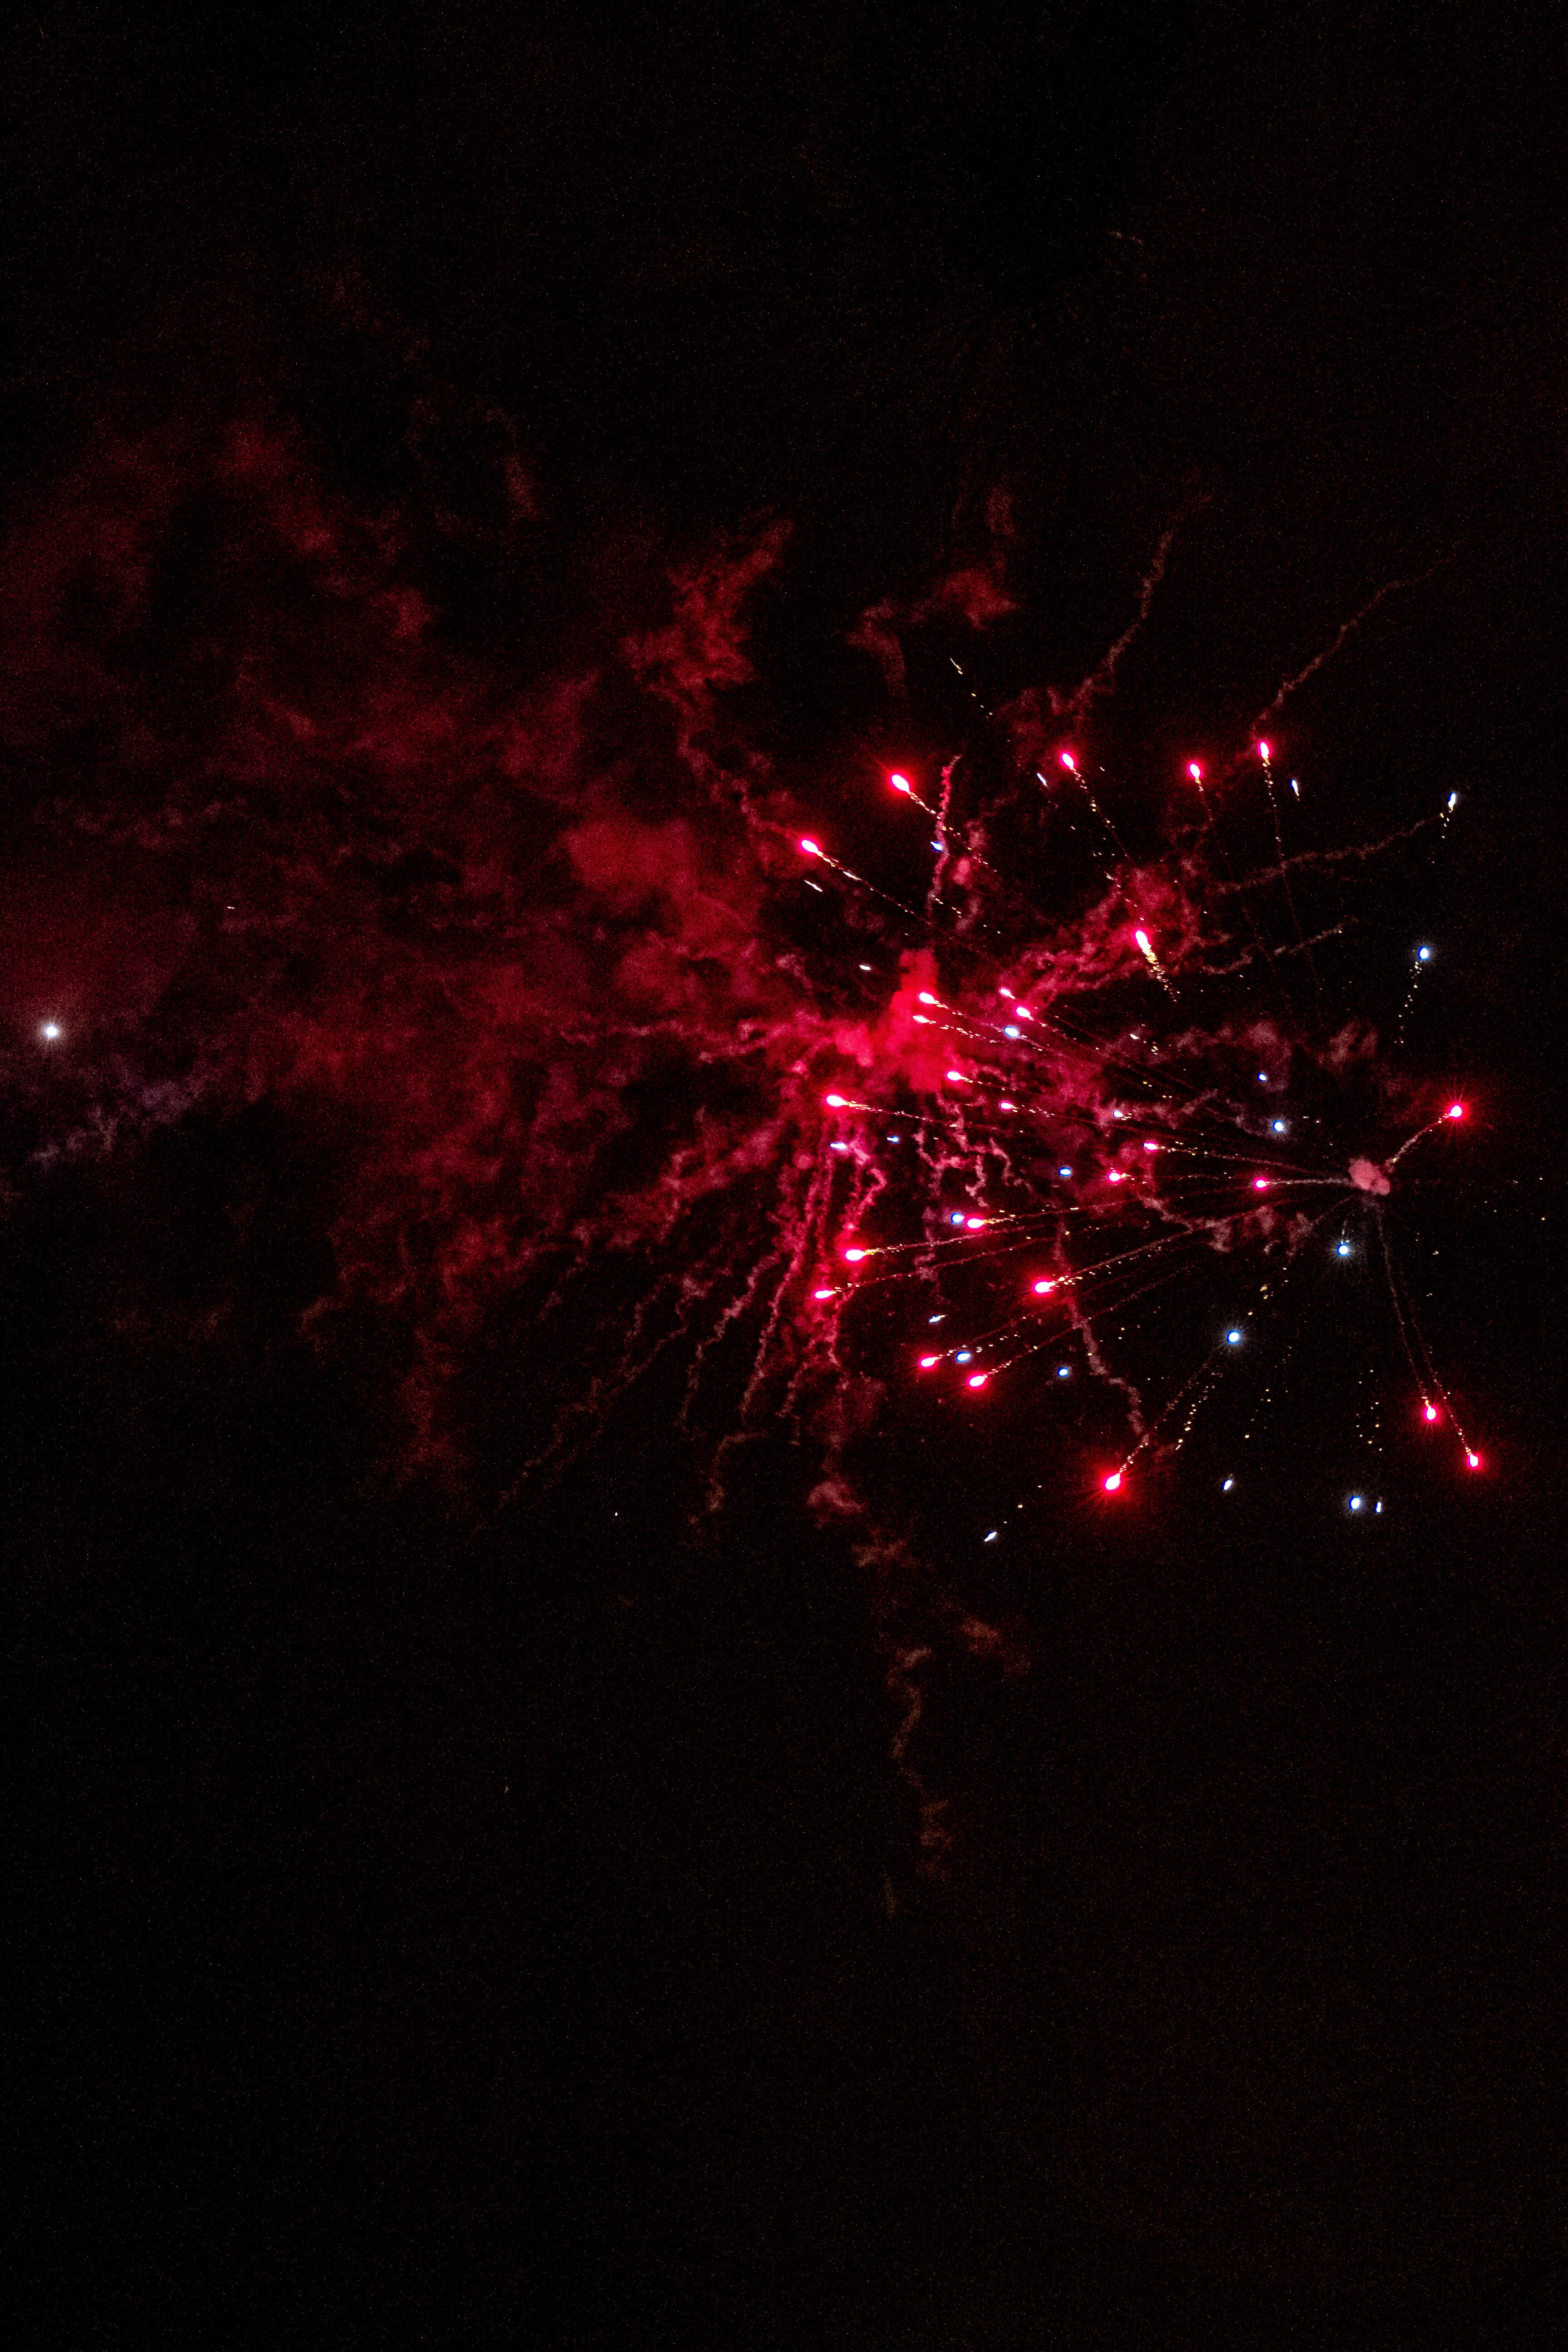 red, smoke, dark, holidays, night, sparks, fireworks, firework